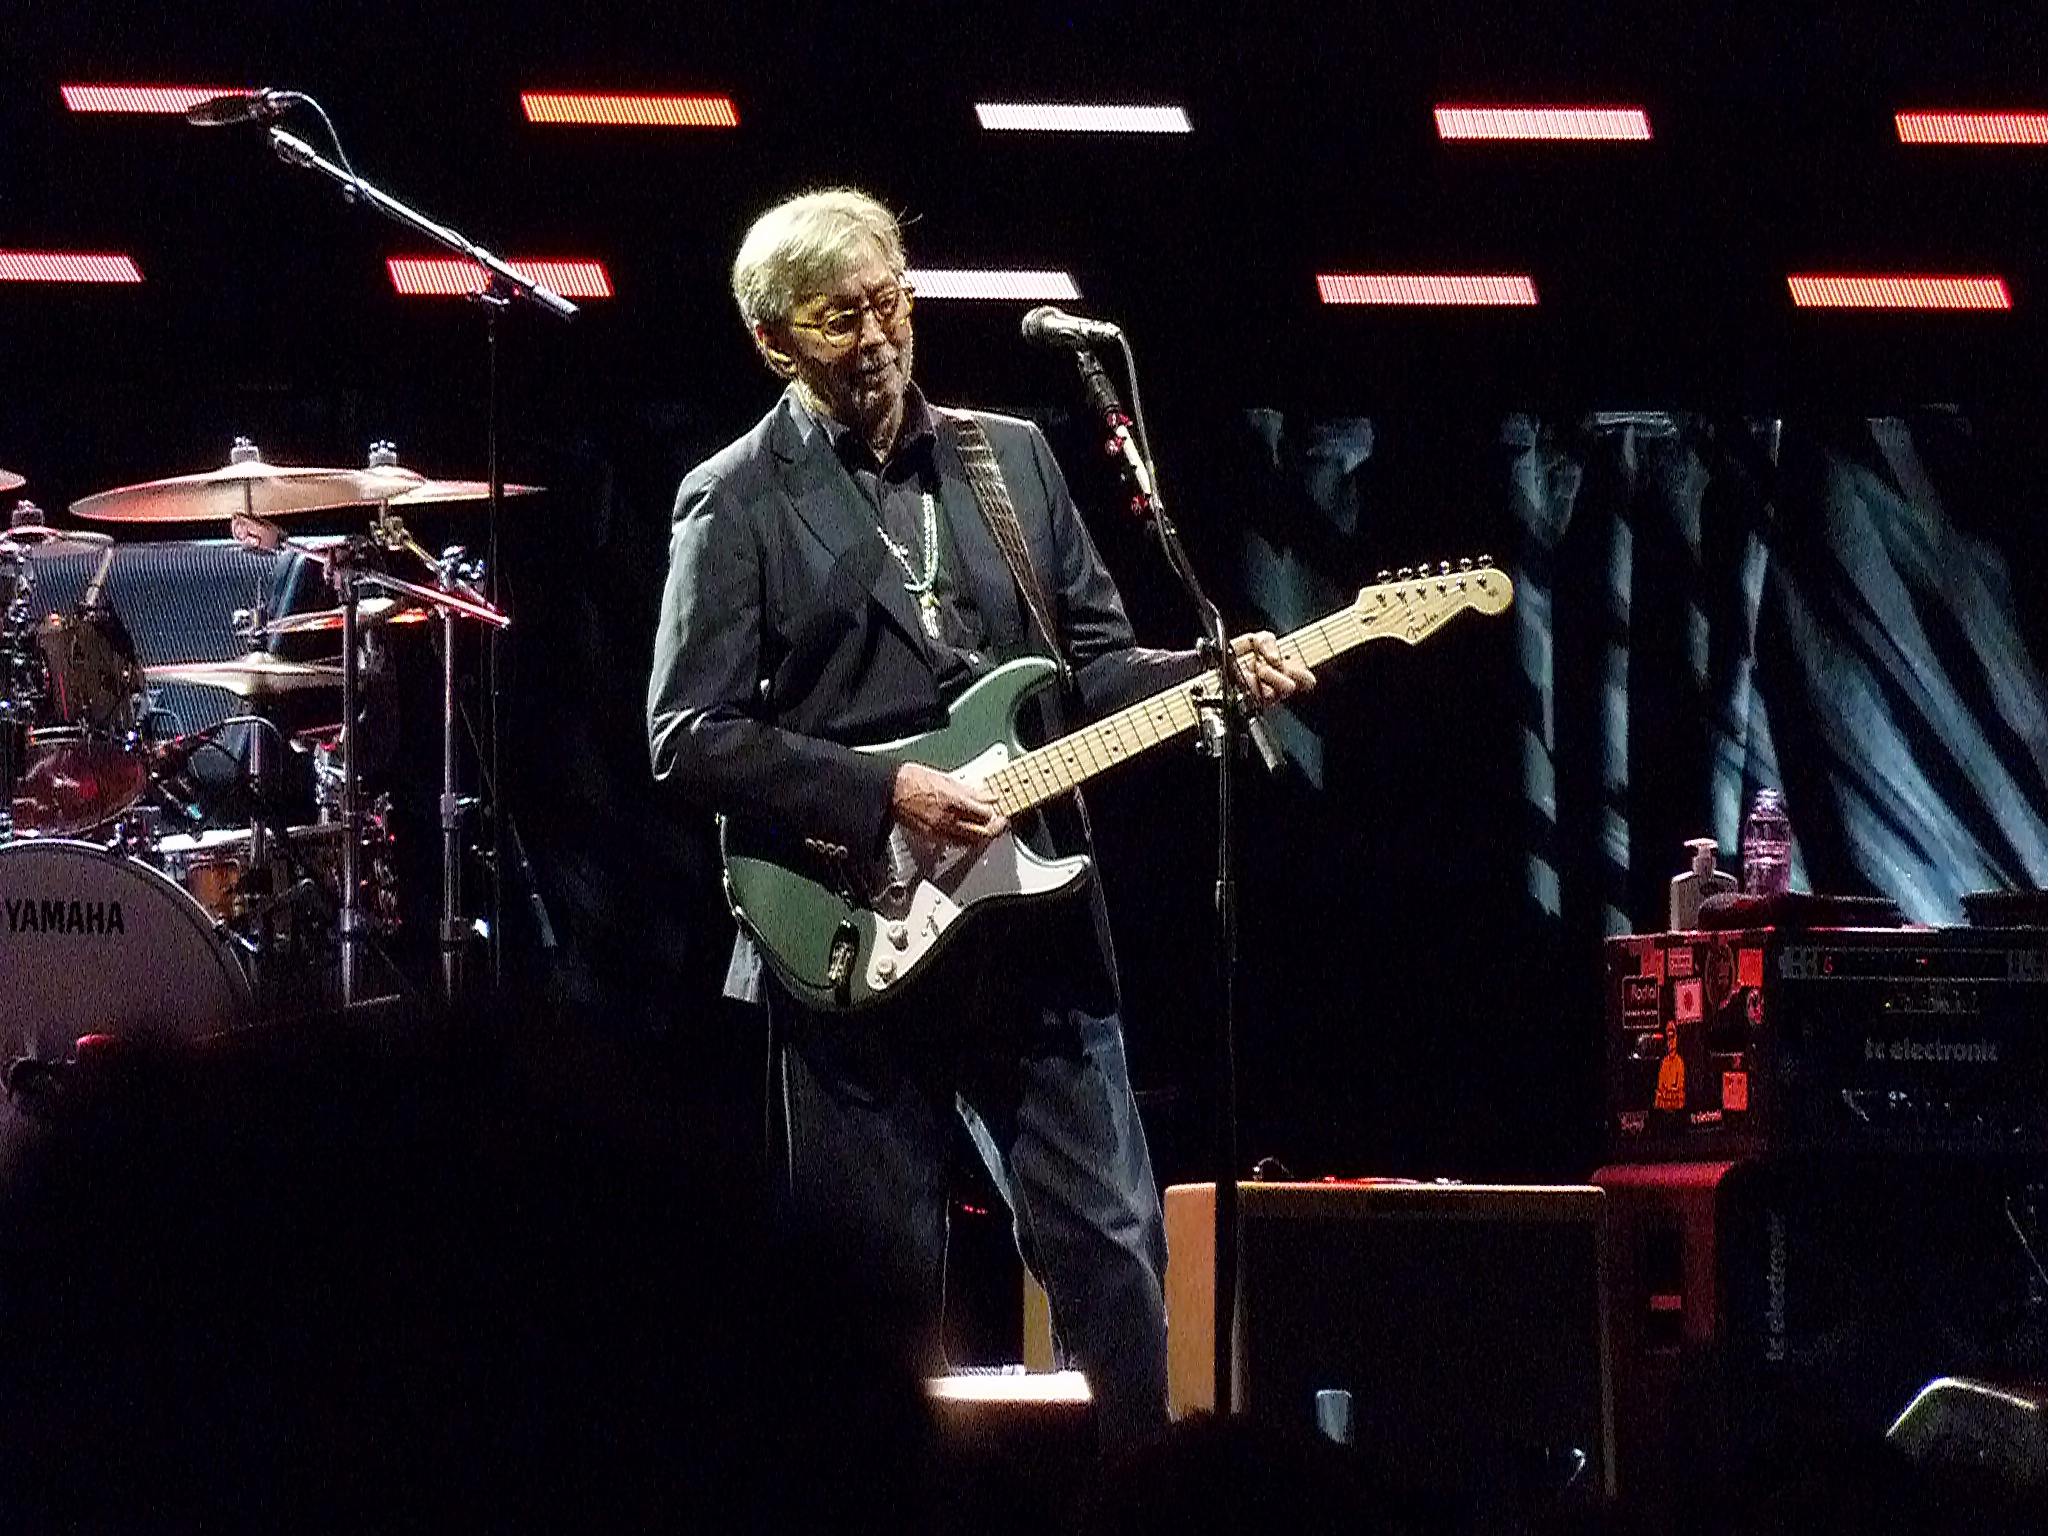 Eric Clapton at the Royal Albert Hall London an evening